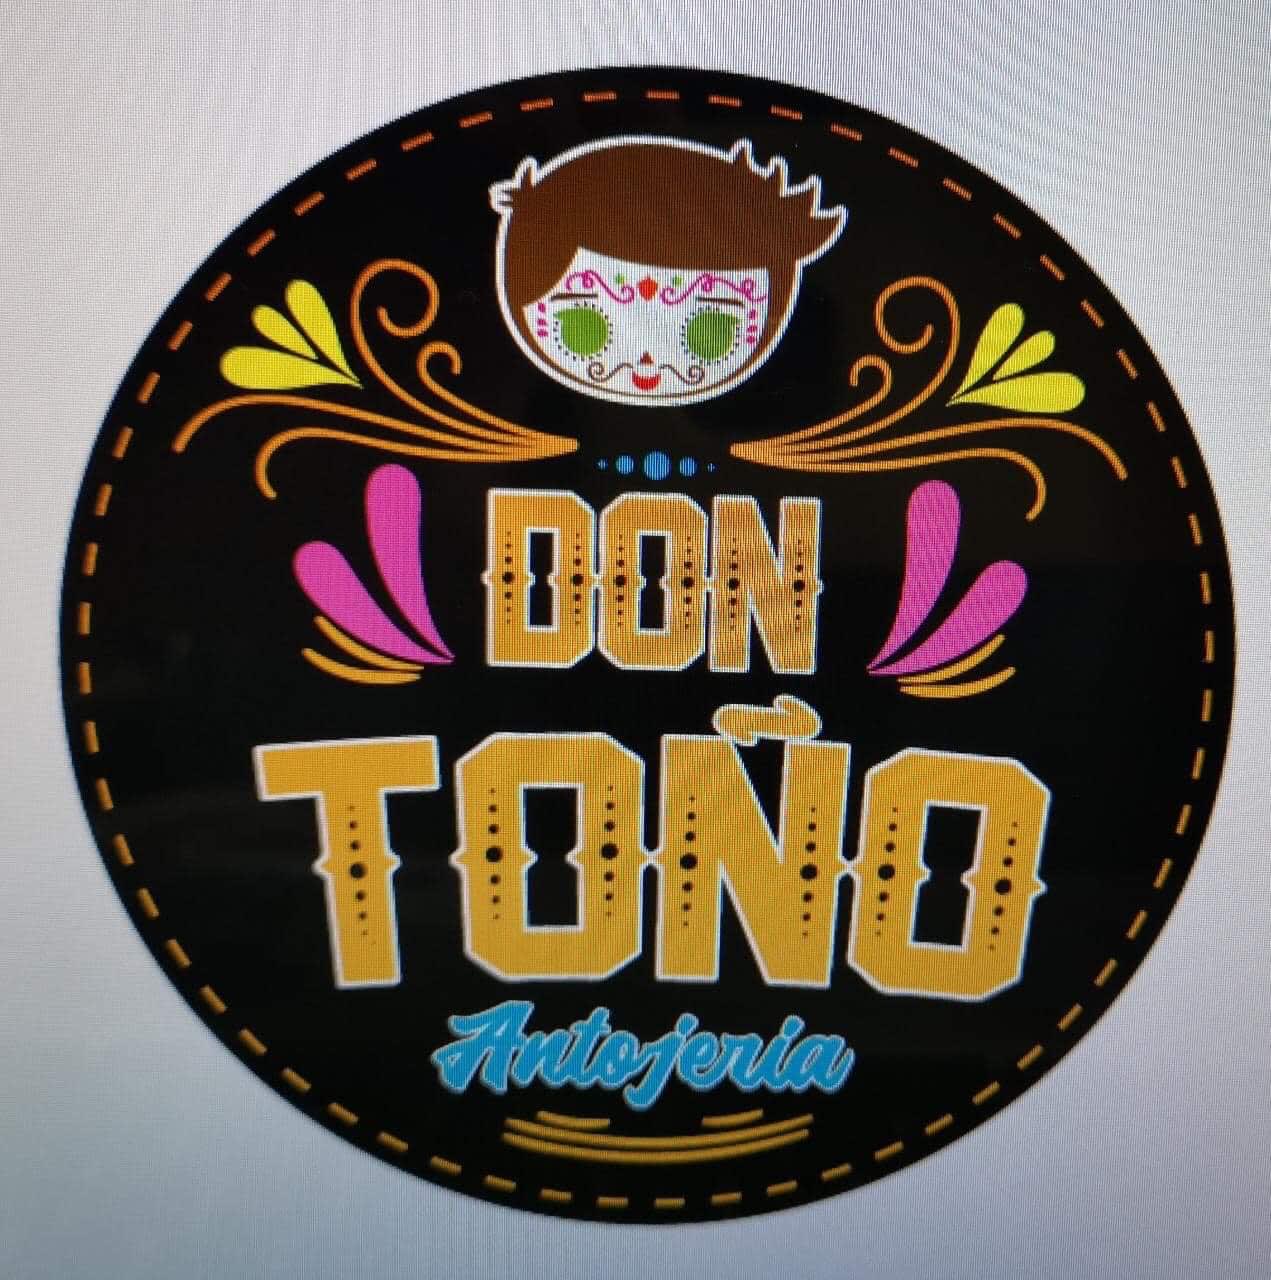 Don Toño Antojería